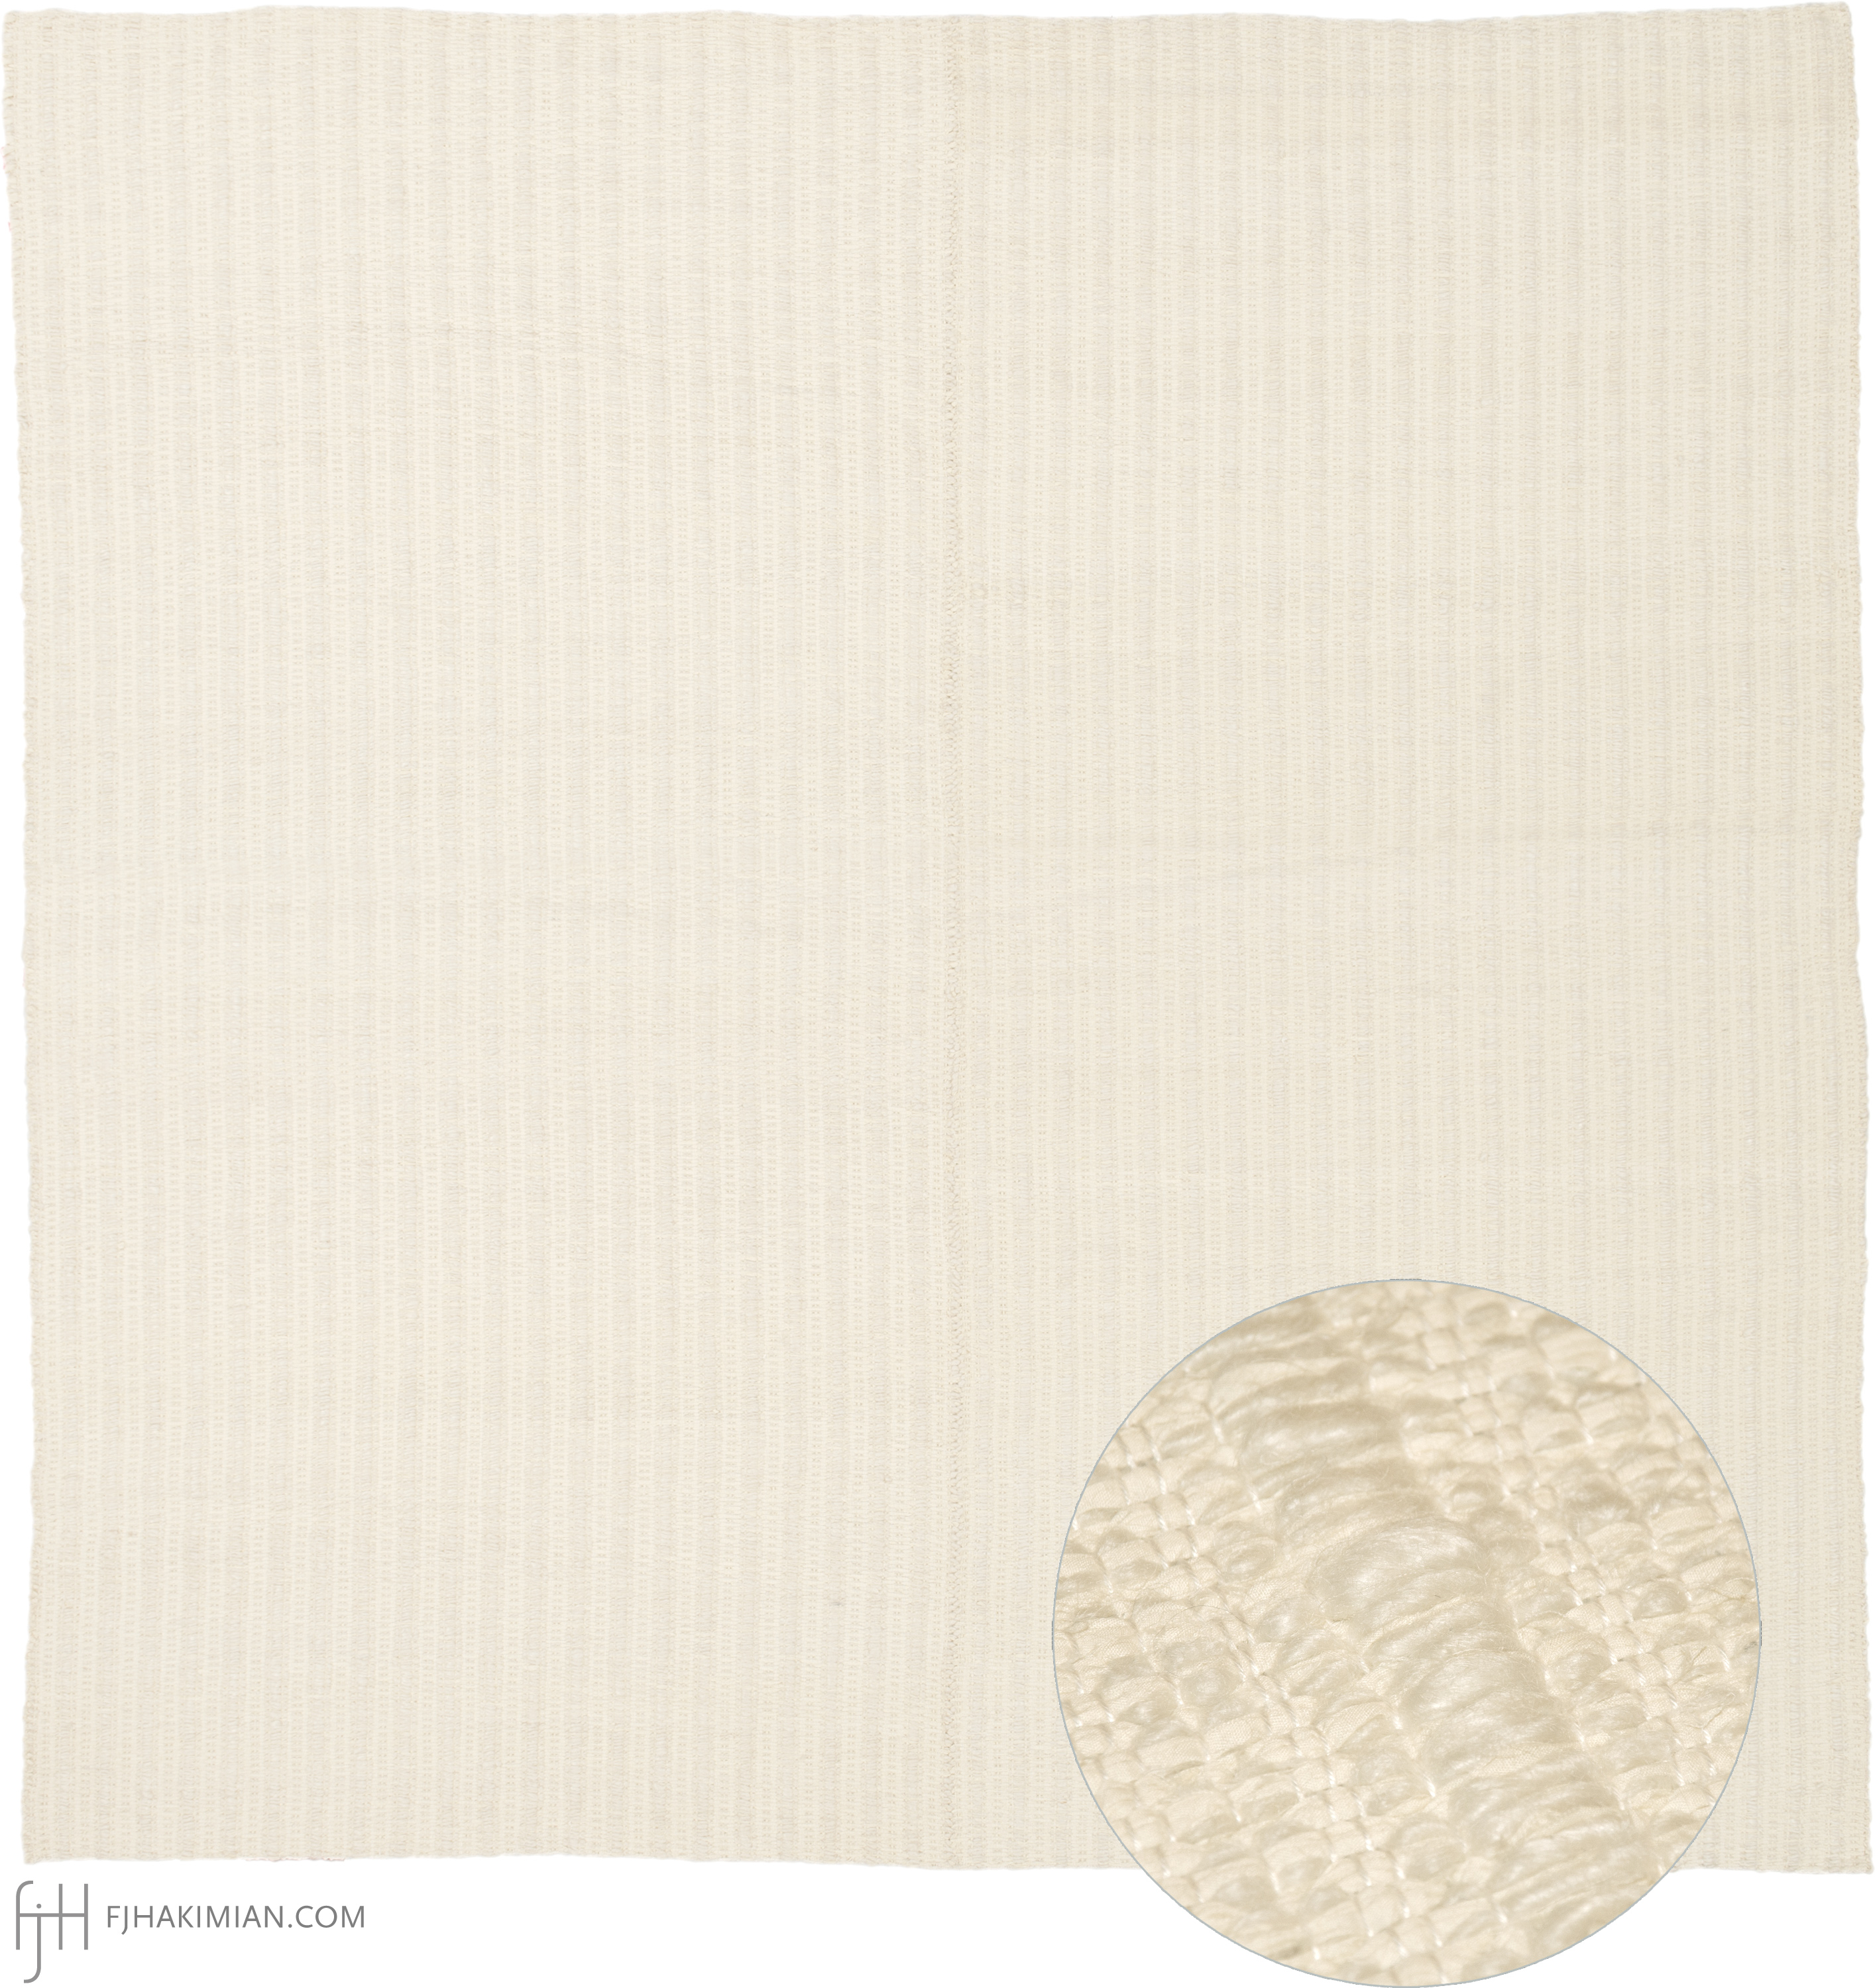 26573 | CS-Twisted Mohair Cotton White | Custom Mohair Carpet | FJ Hakimian | Carpet Gallery in NYC